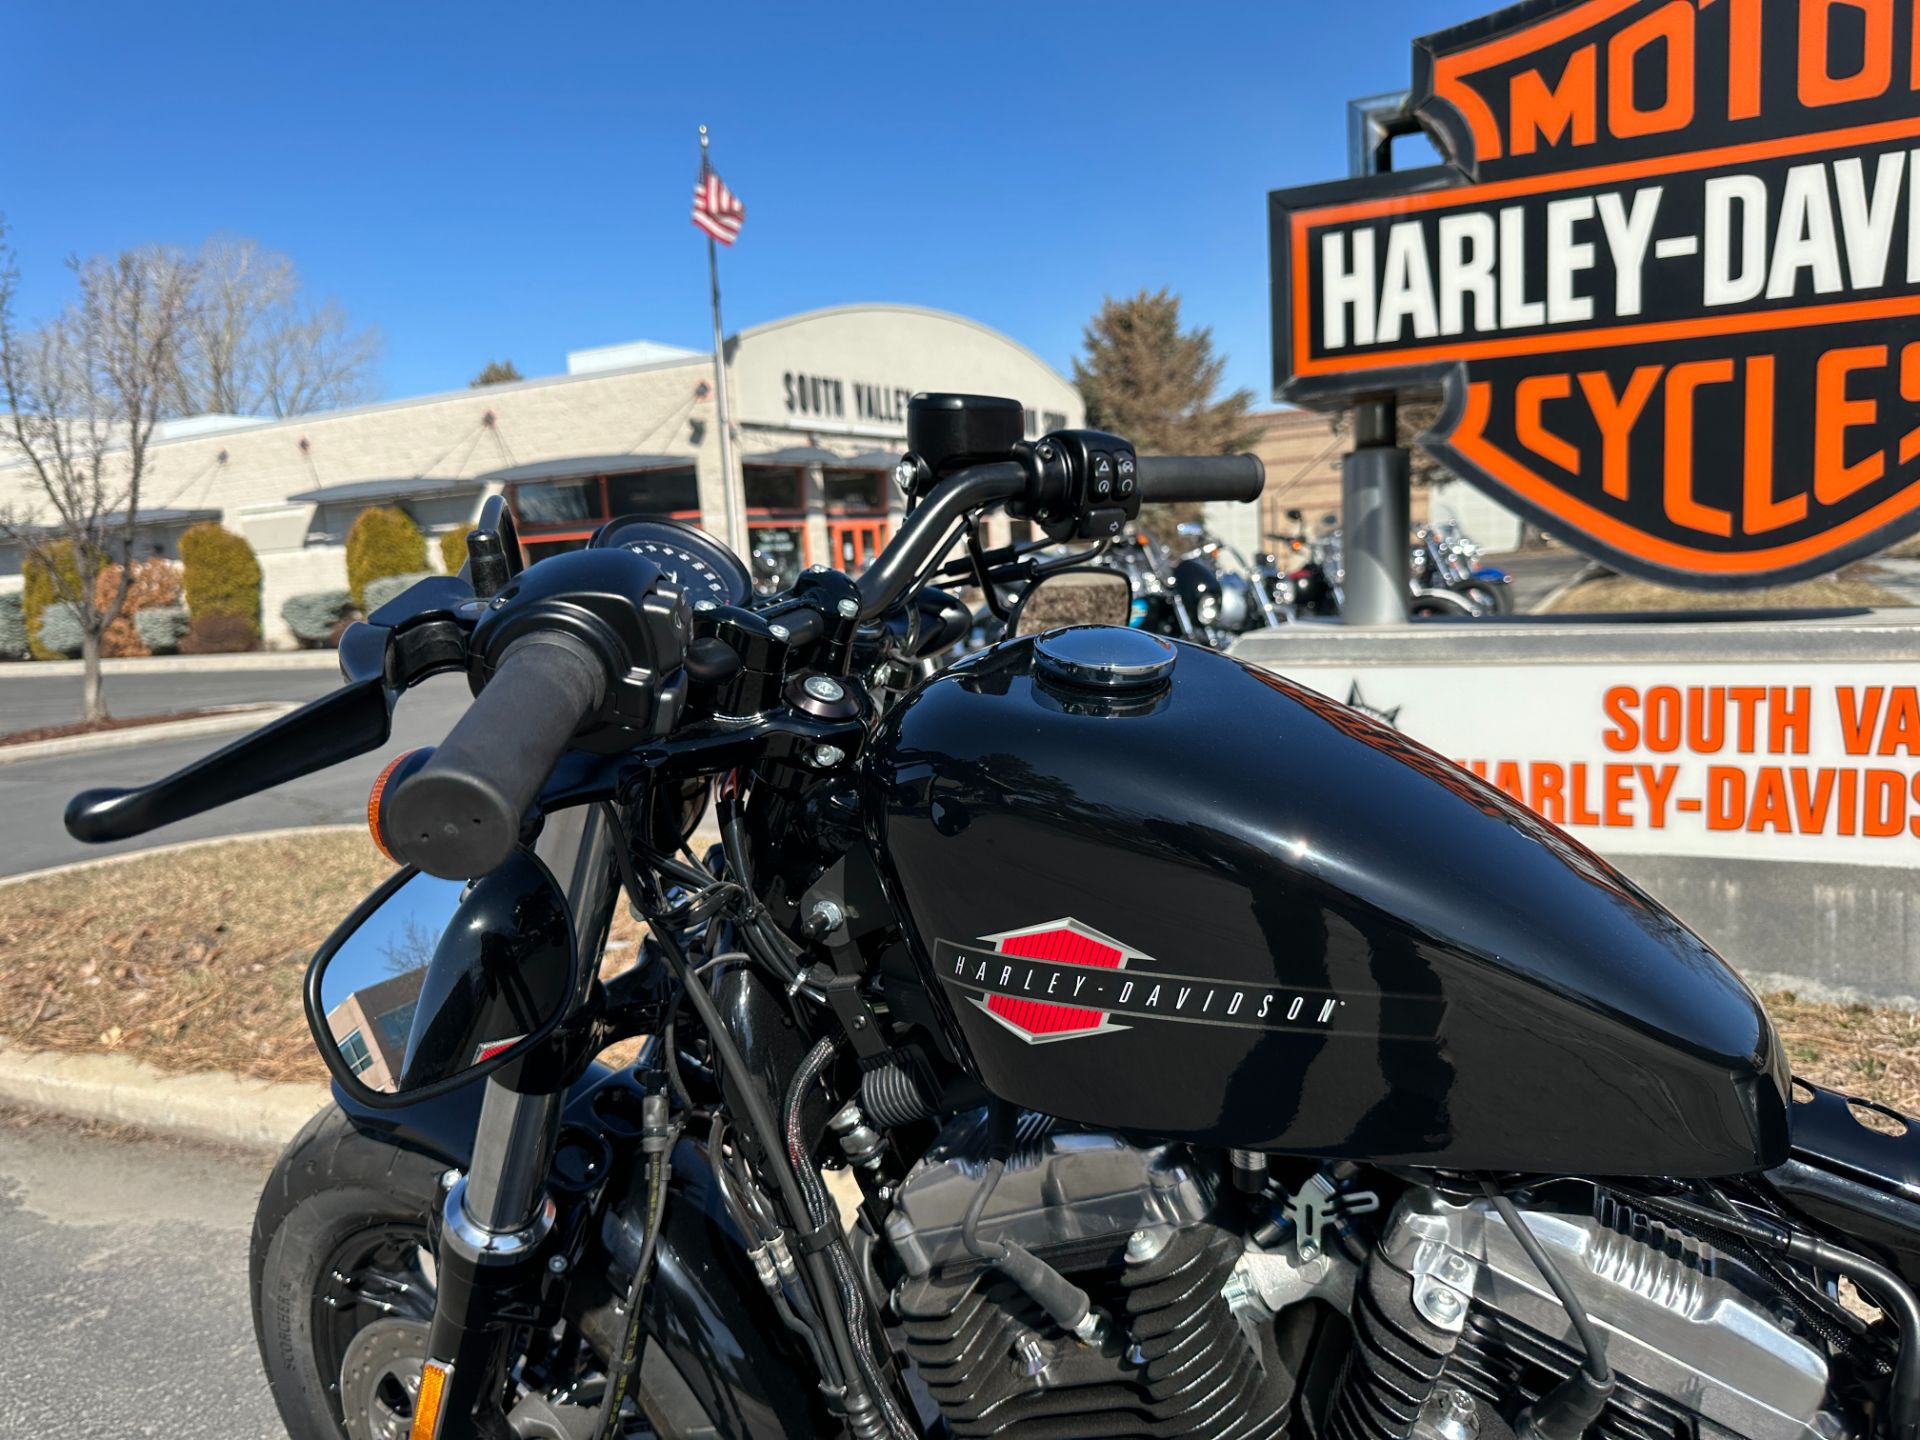 2022 Harley-Davidson Forty-Eight® in Sandy, Utah - Photo 10